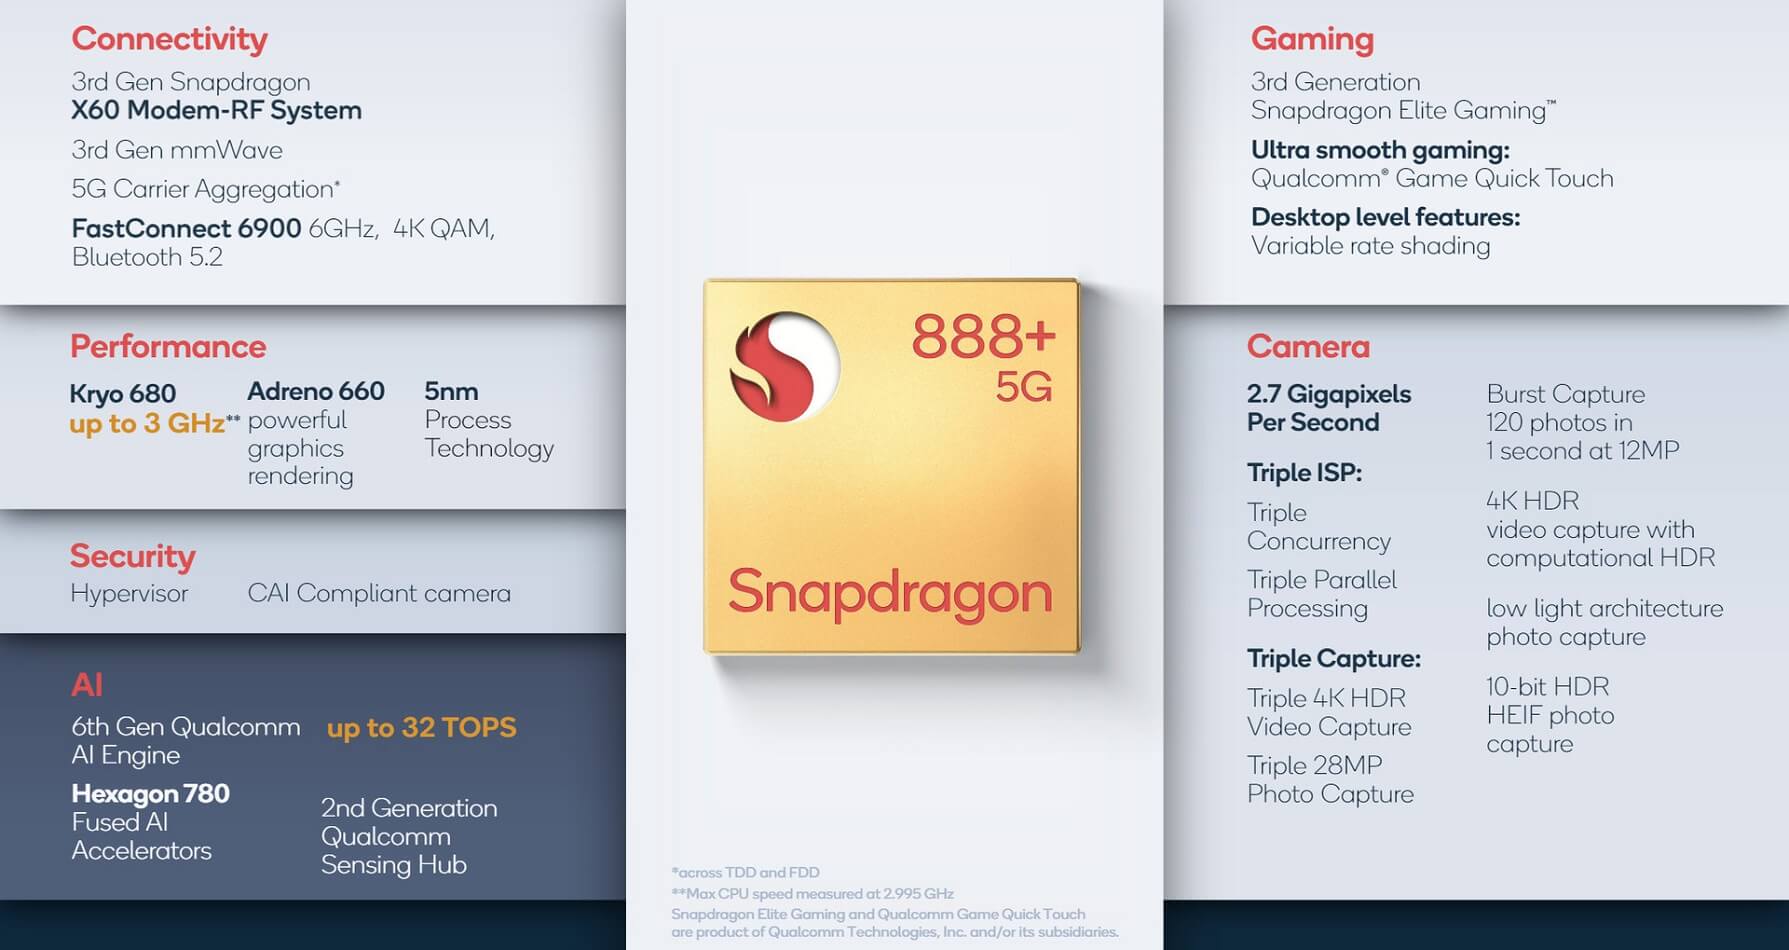 Snapdragon 888 Plus features